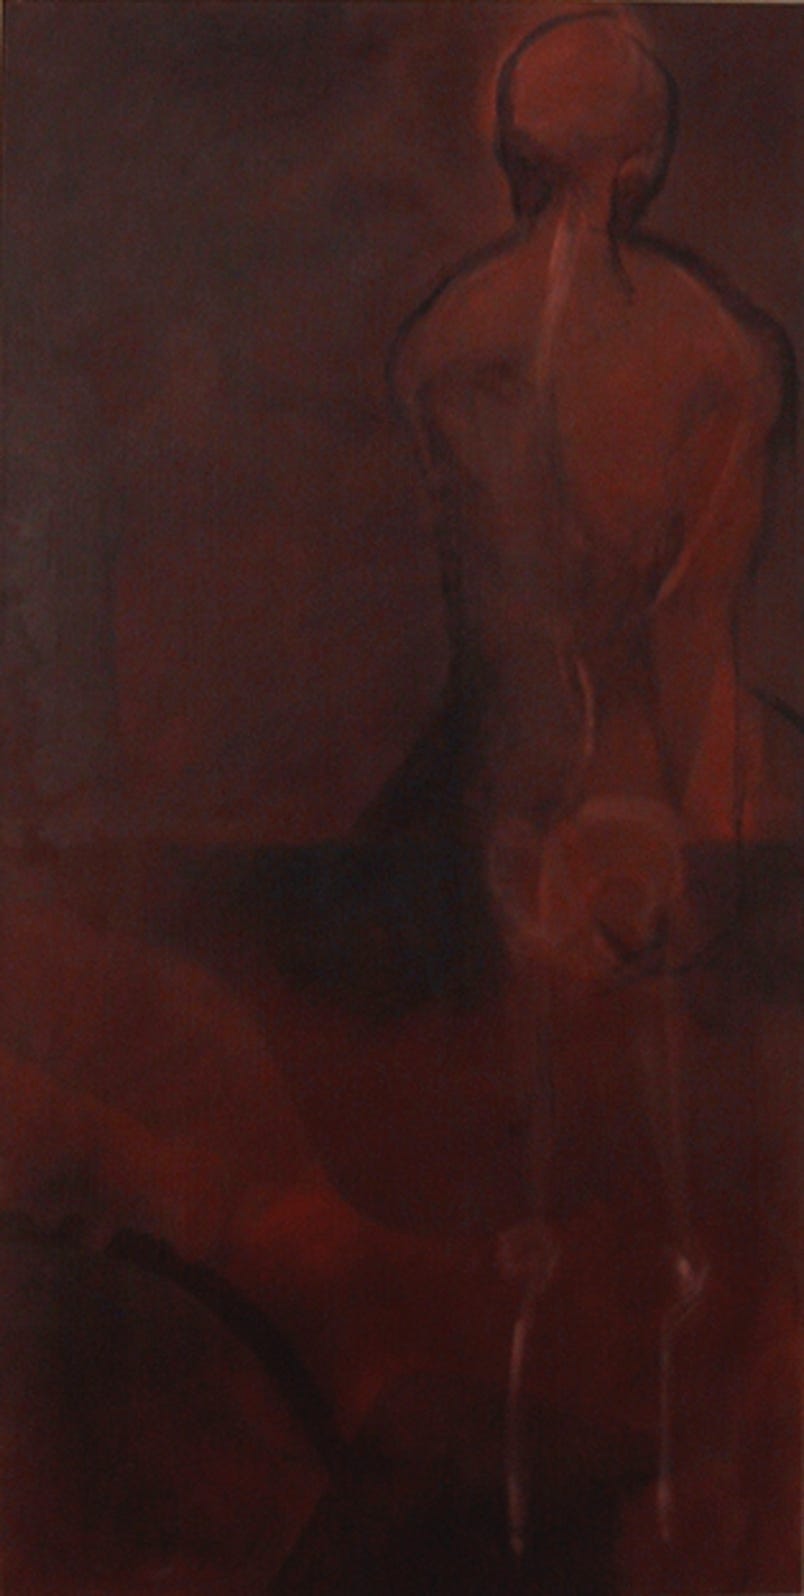 105x53 cm, oil on canvas, 2006